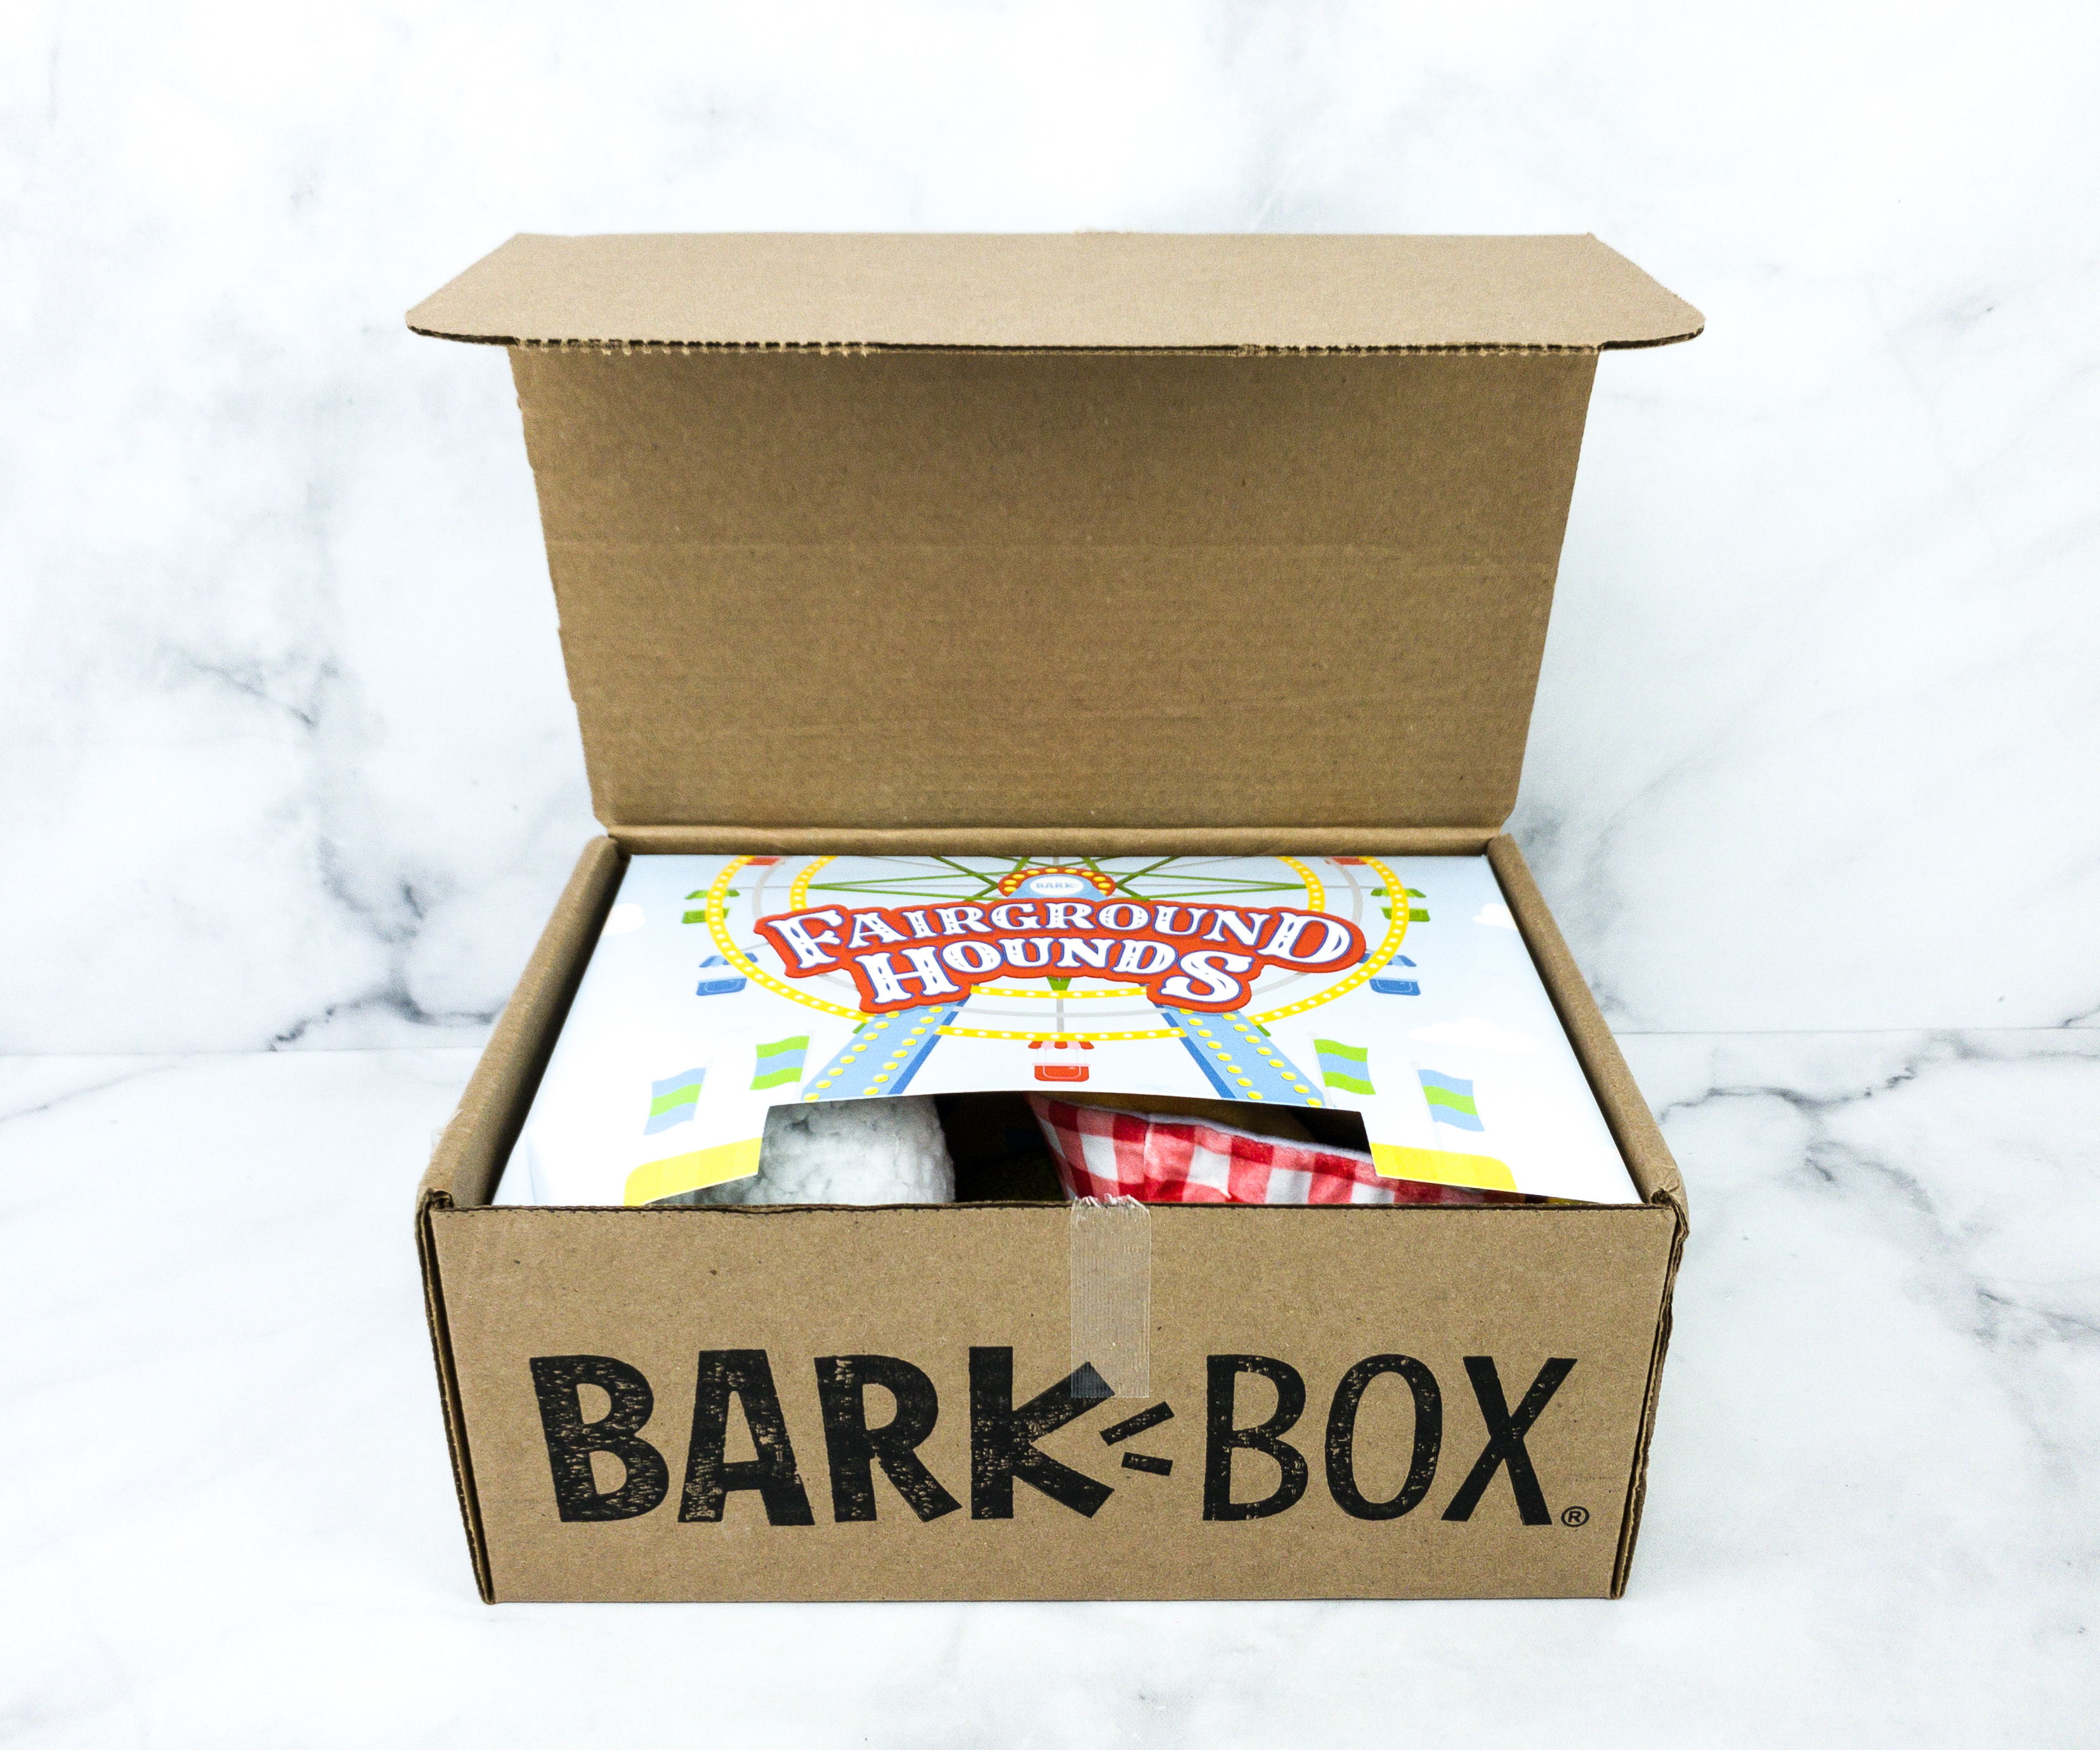 barkbox shipping to canada